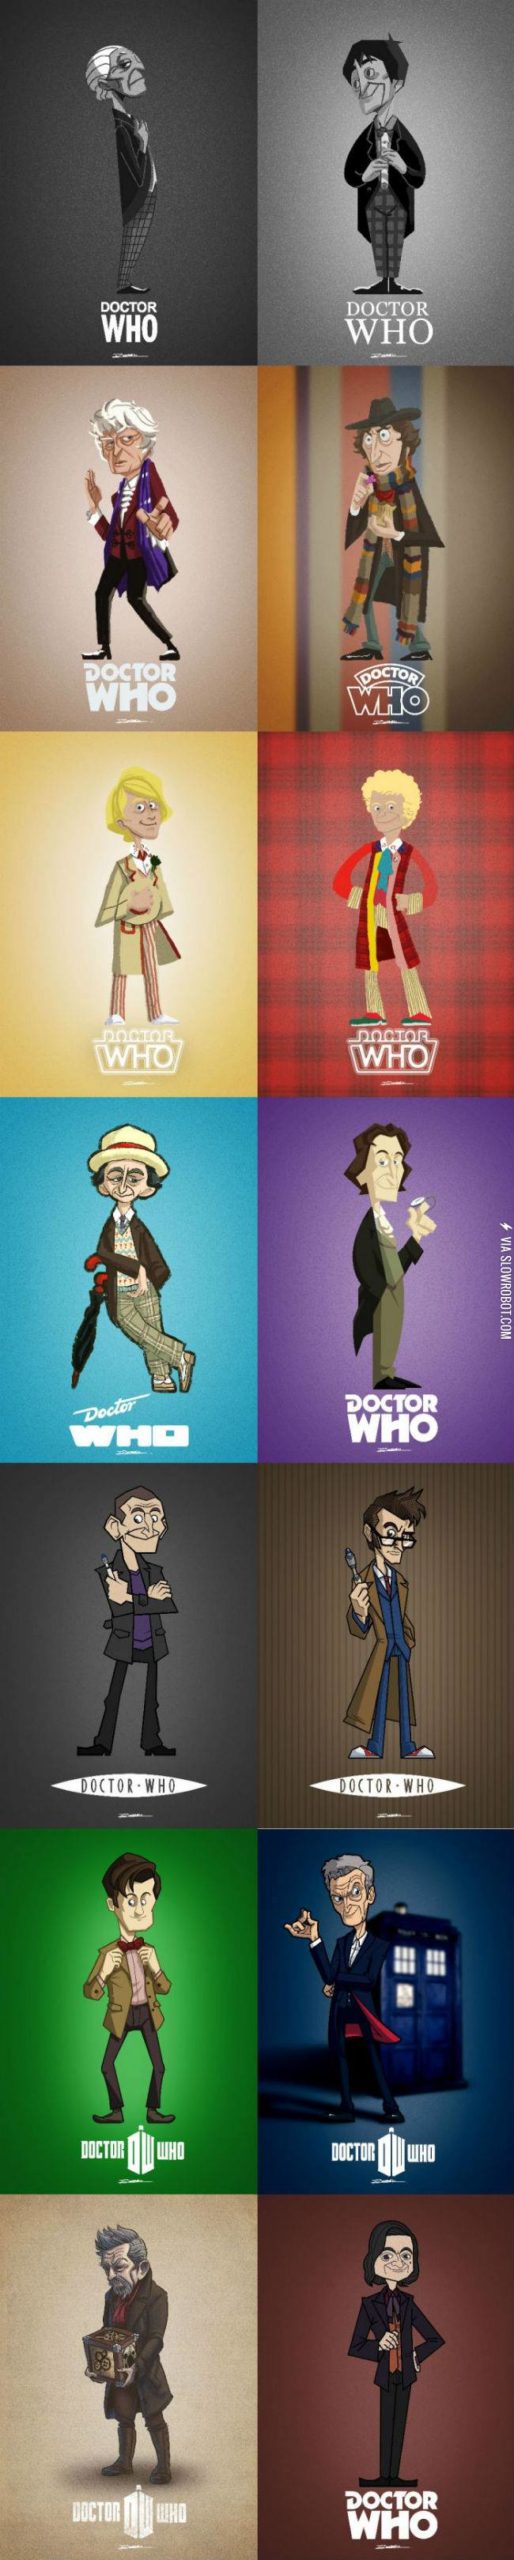 Doctor+Who+as+a+cartoon.